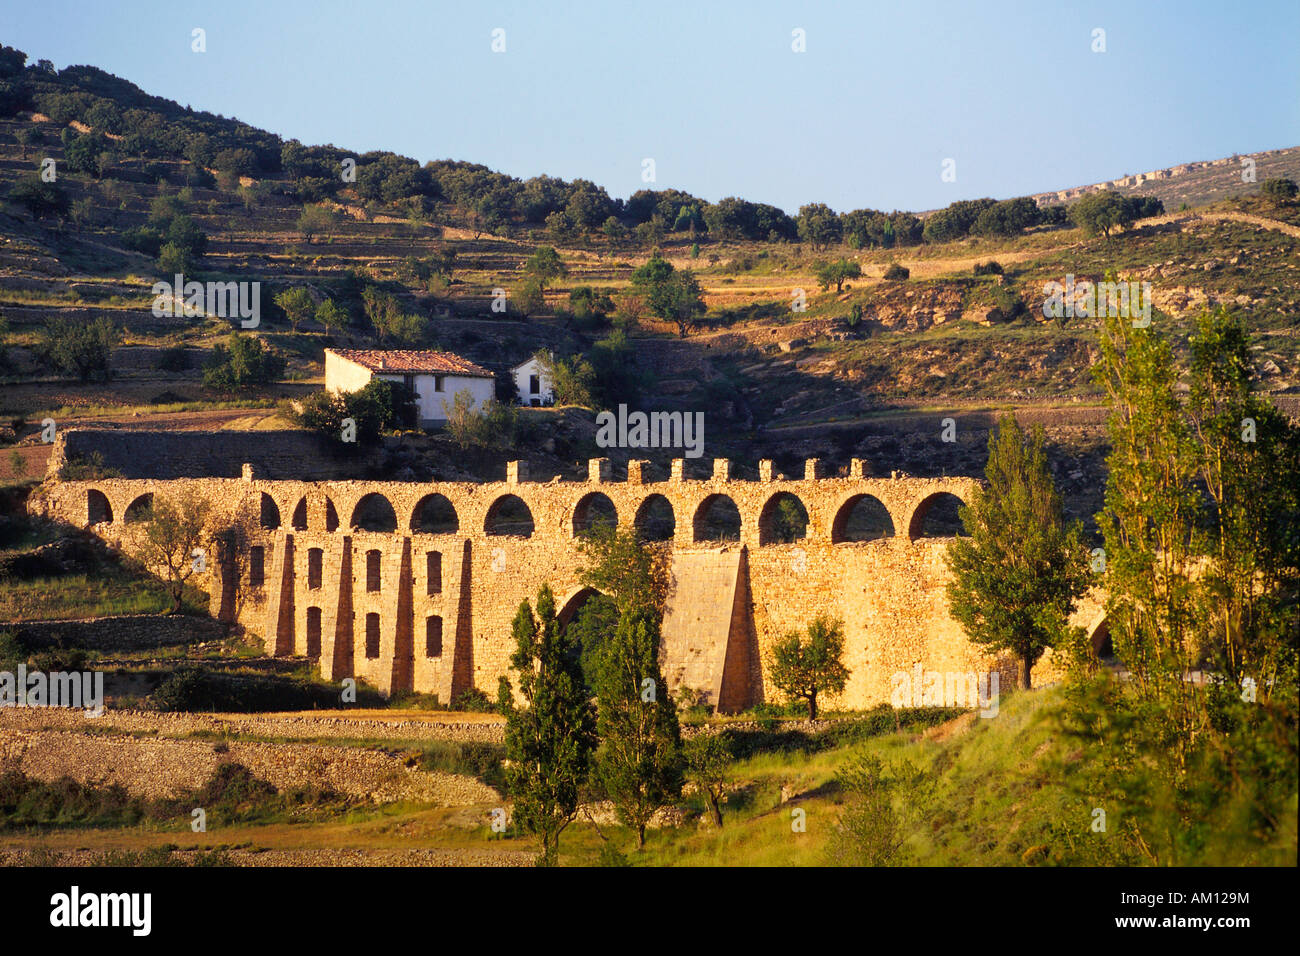 Acueducto de Santa Lucía - Morella, province of Castellon Stock Photo